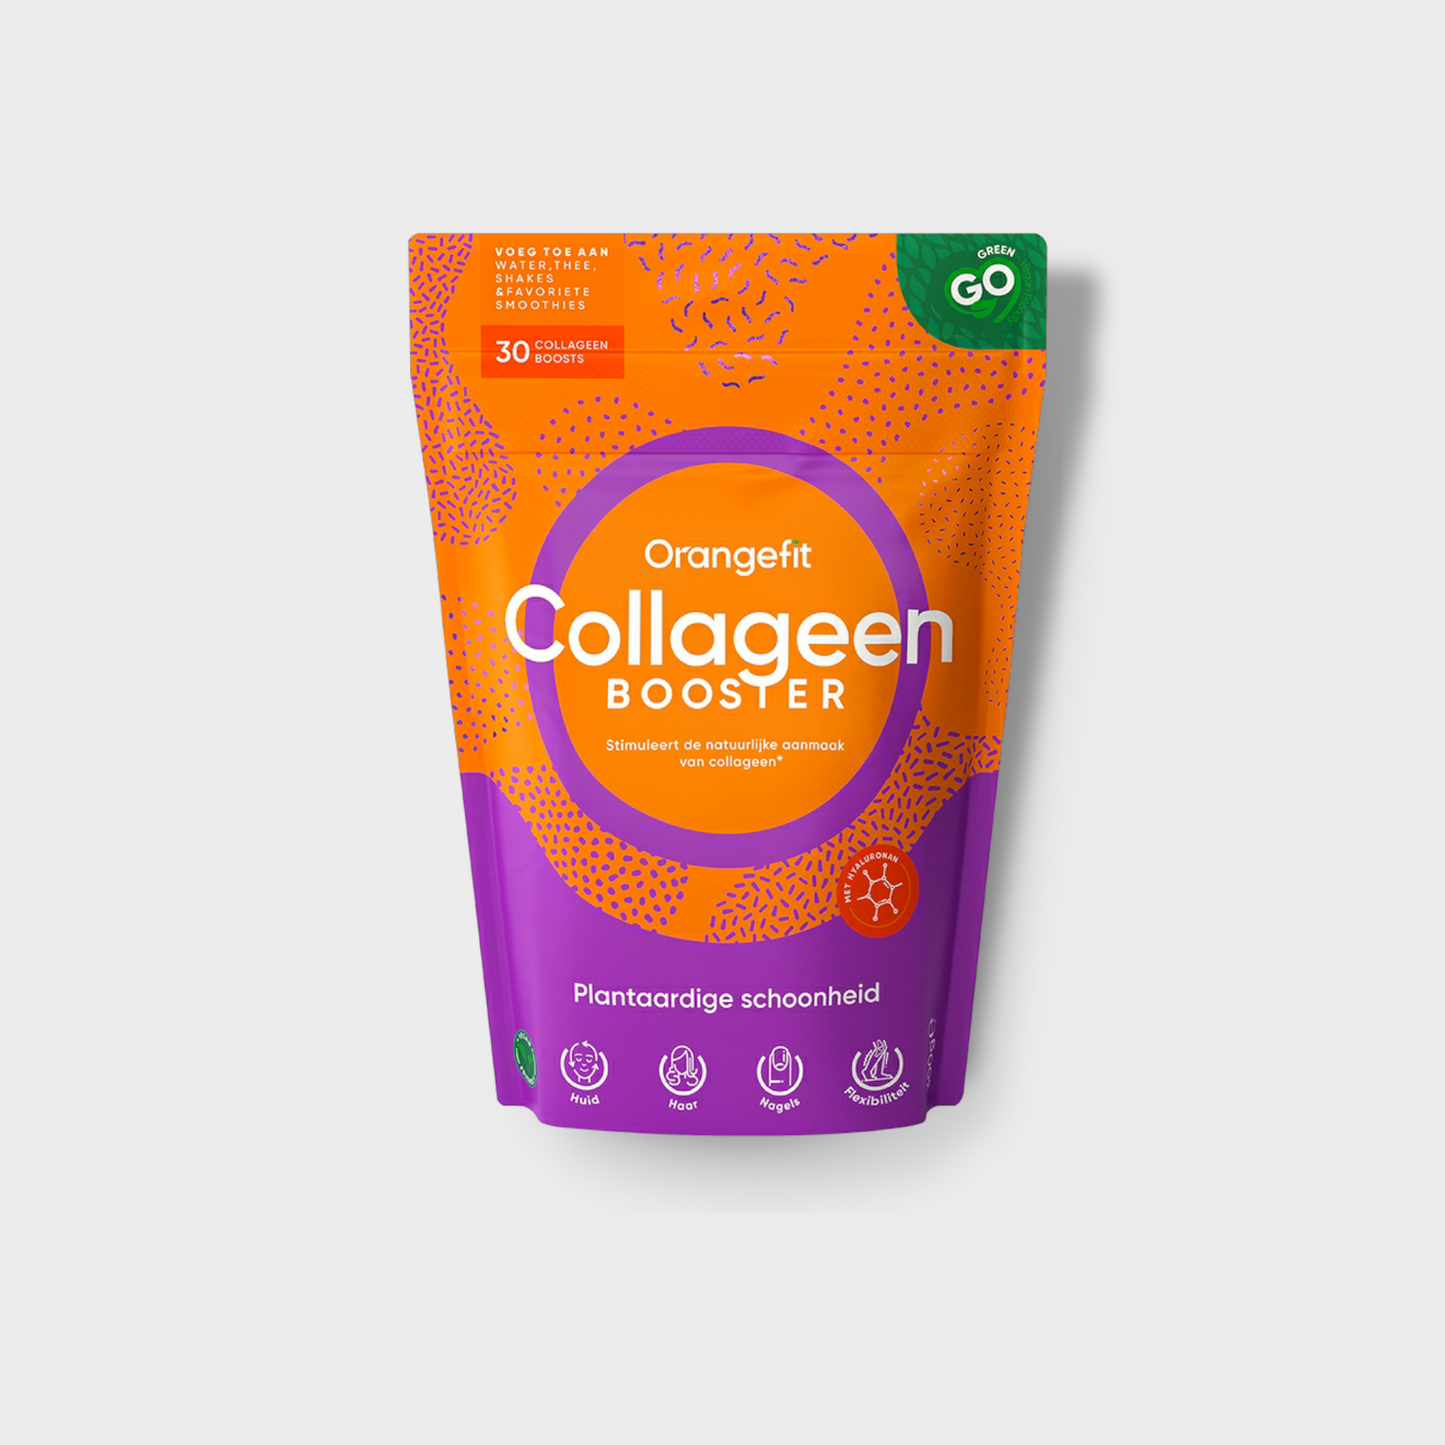 Orangefit Collagen Booster (30 servings)